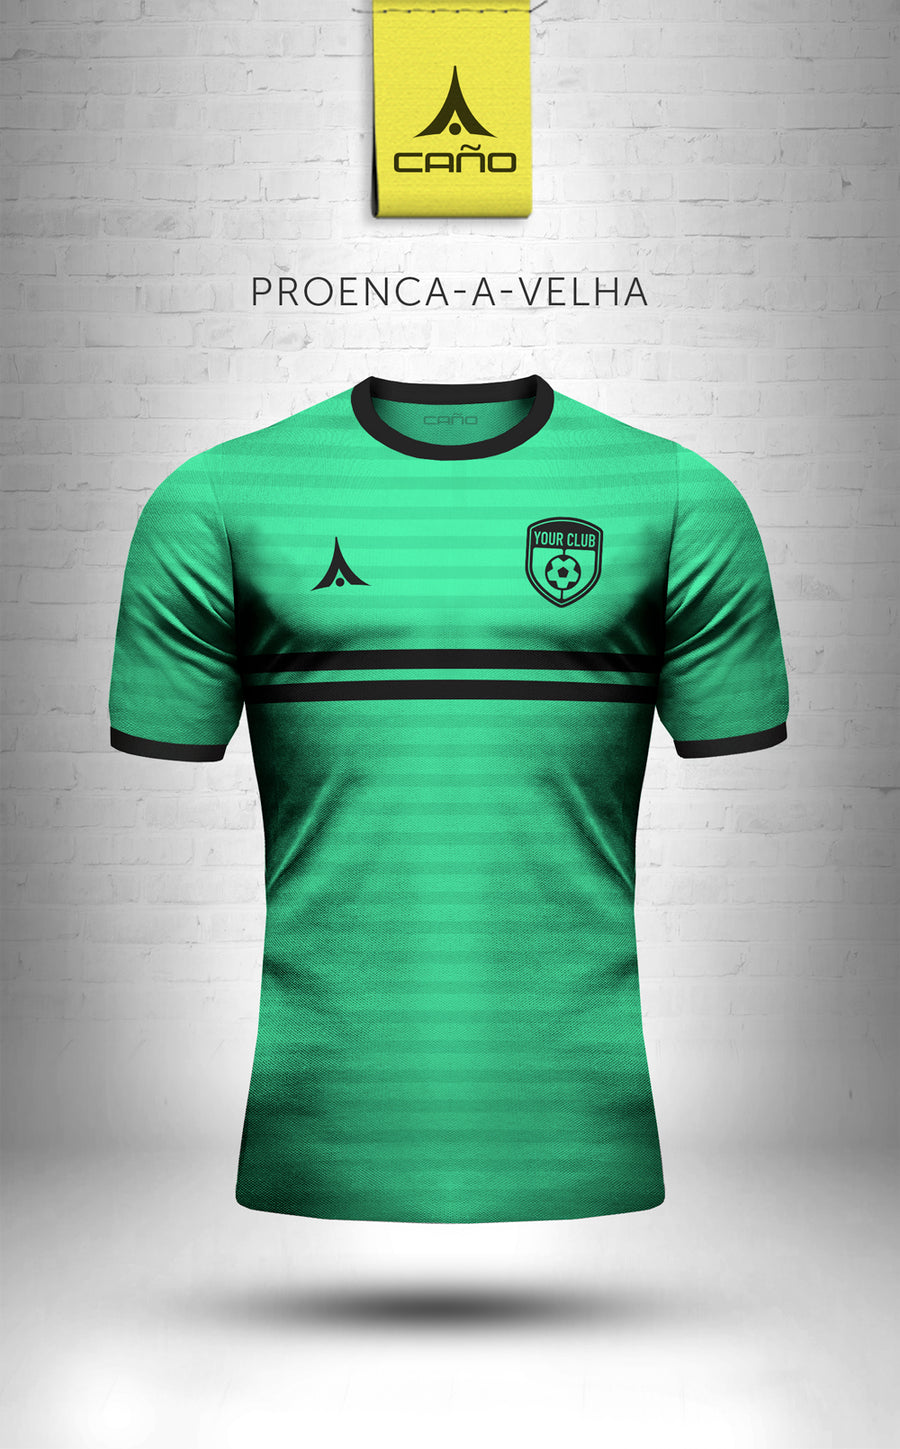 Proenca-a-Velha in green/black